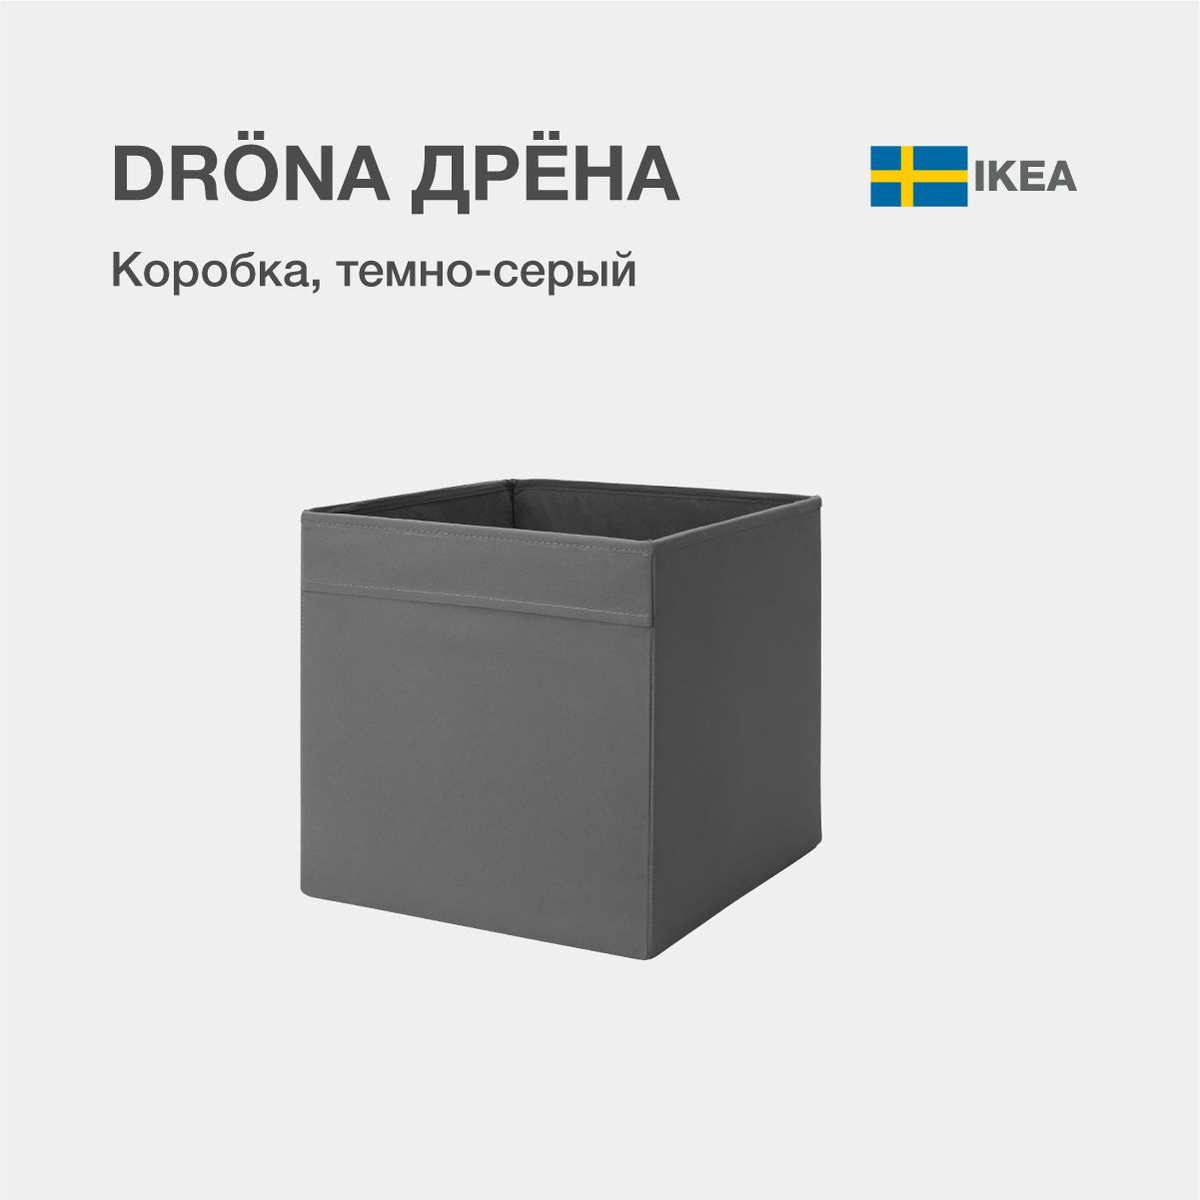 Короб IKEA DRONA темно-серый